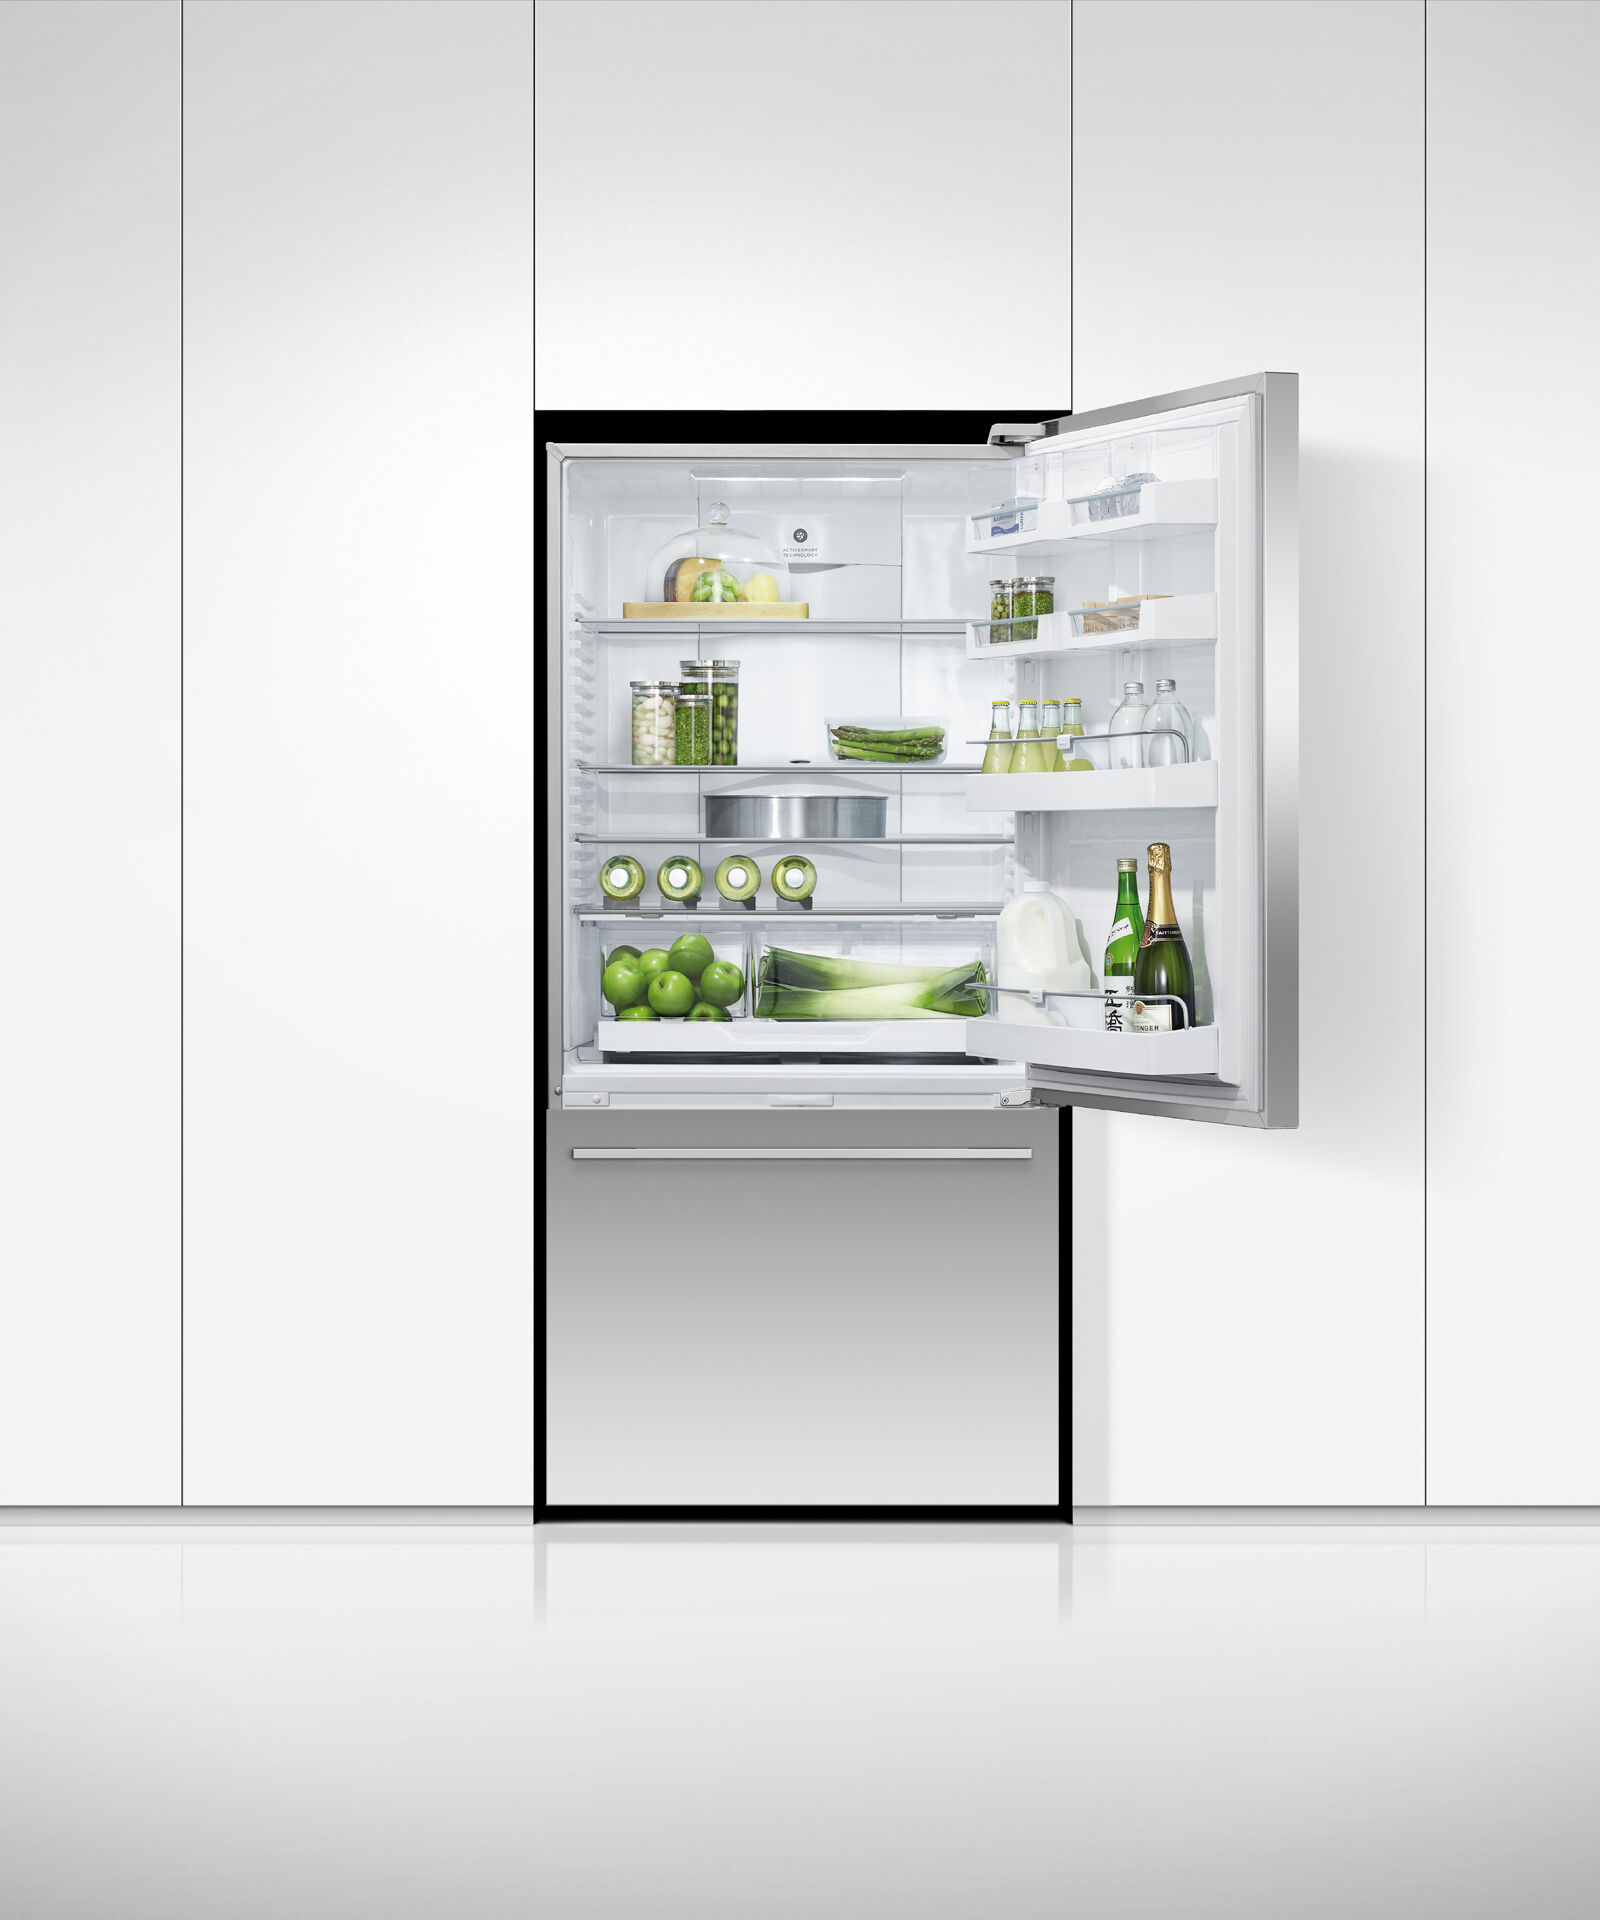 獨立式雪櫃冷凍櫃, 79cm gallery image 4.0